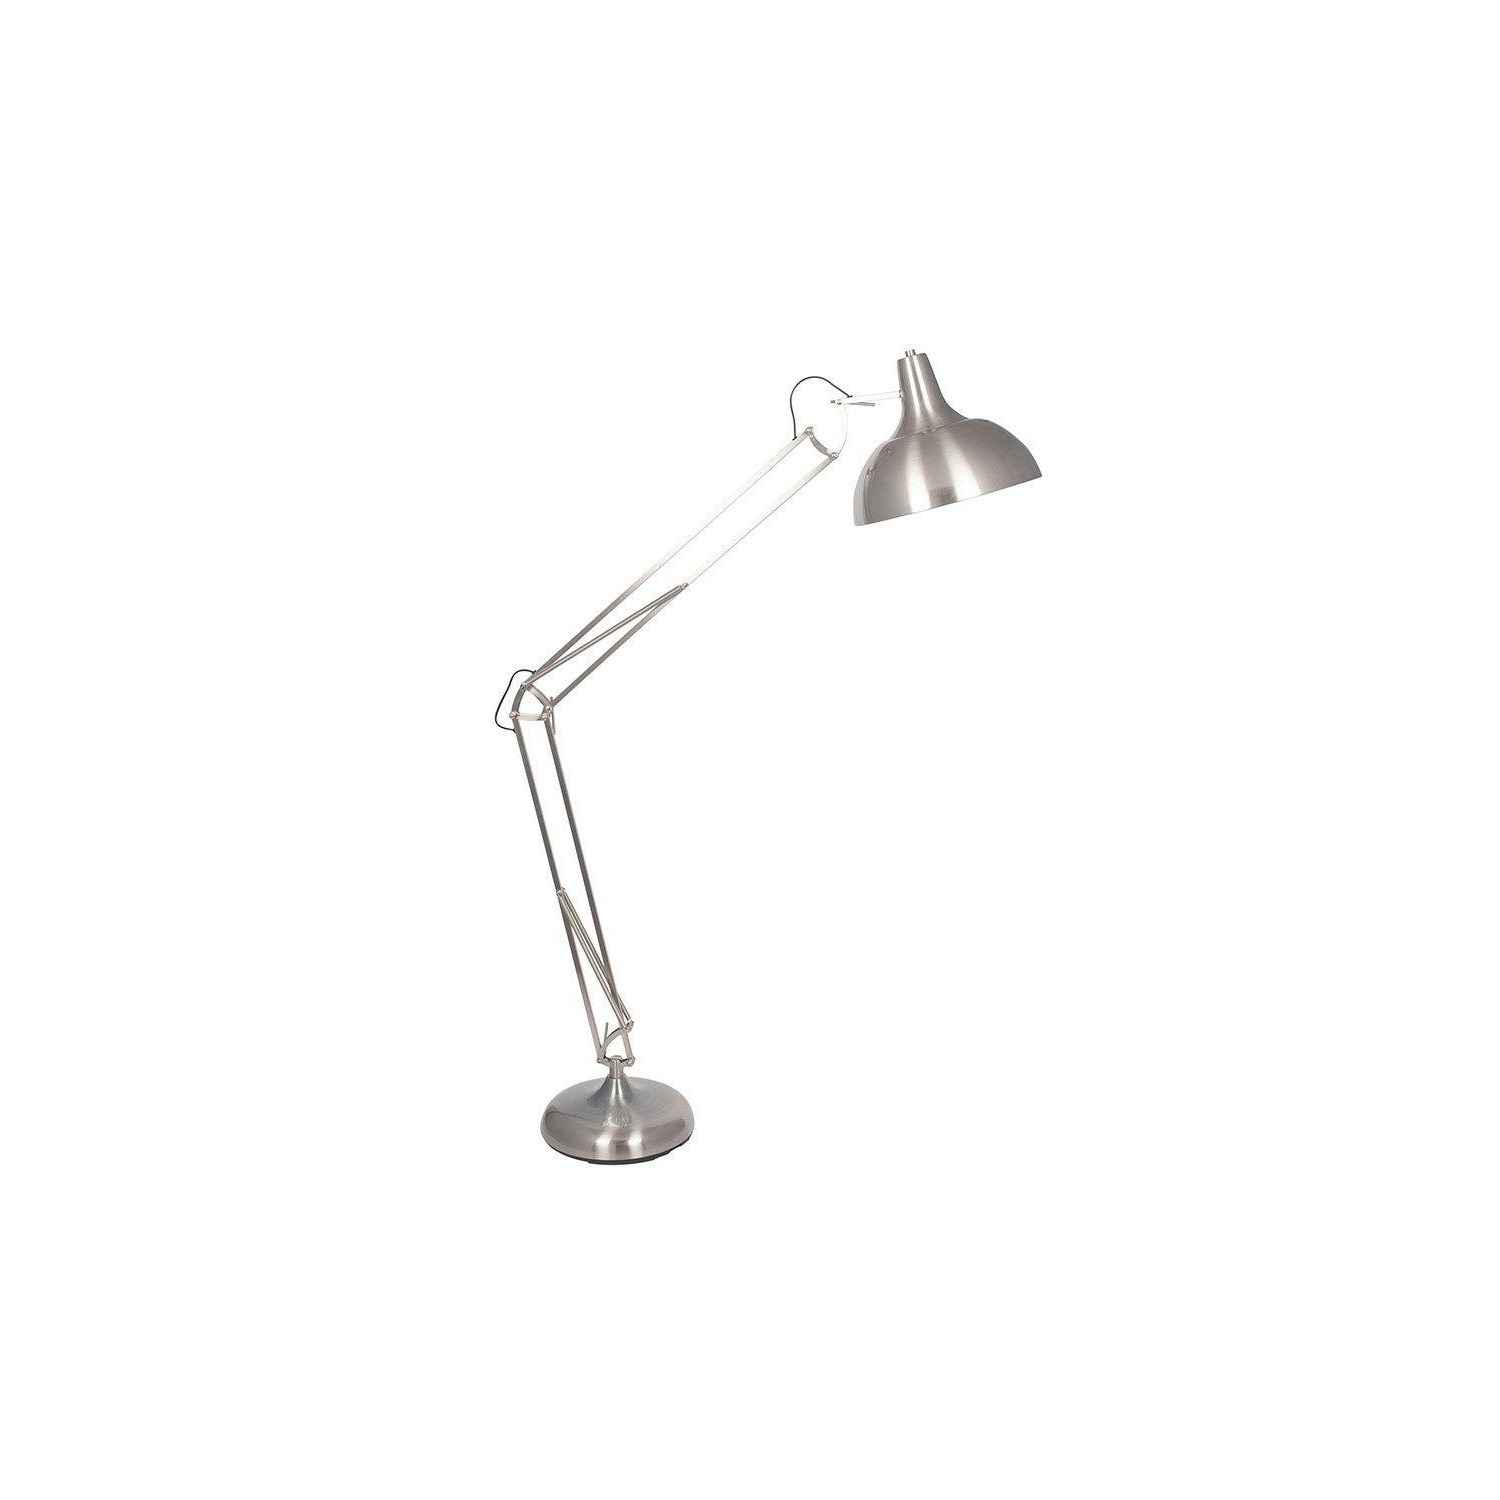 Industrial Adjustable Arm and Head Brushed Silver Metal Task Floor Lamp - image 1